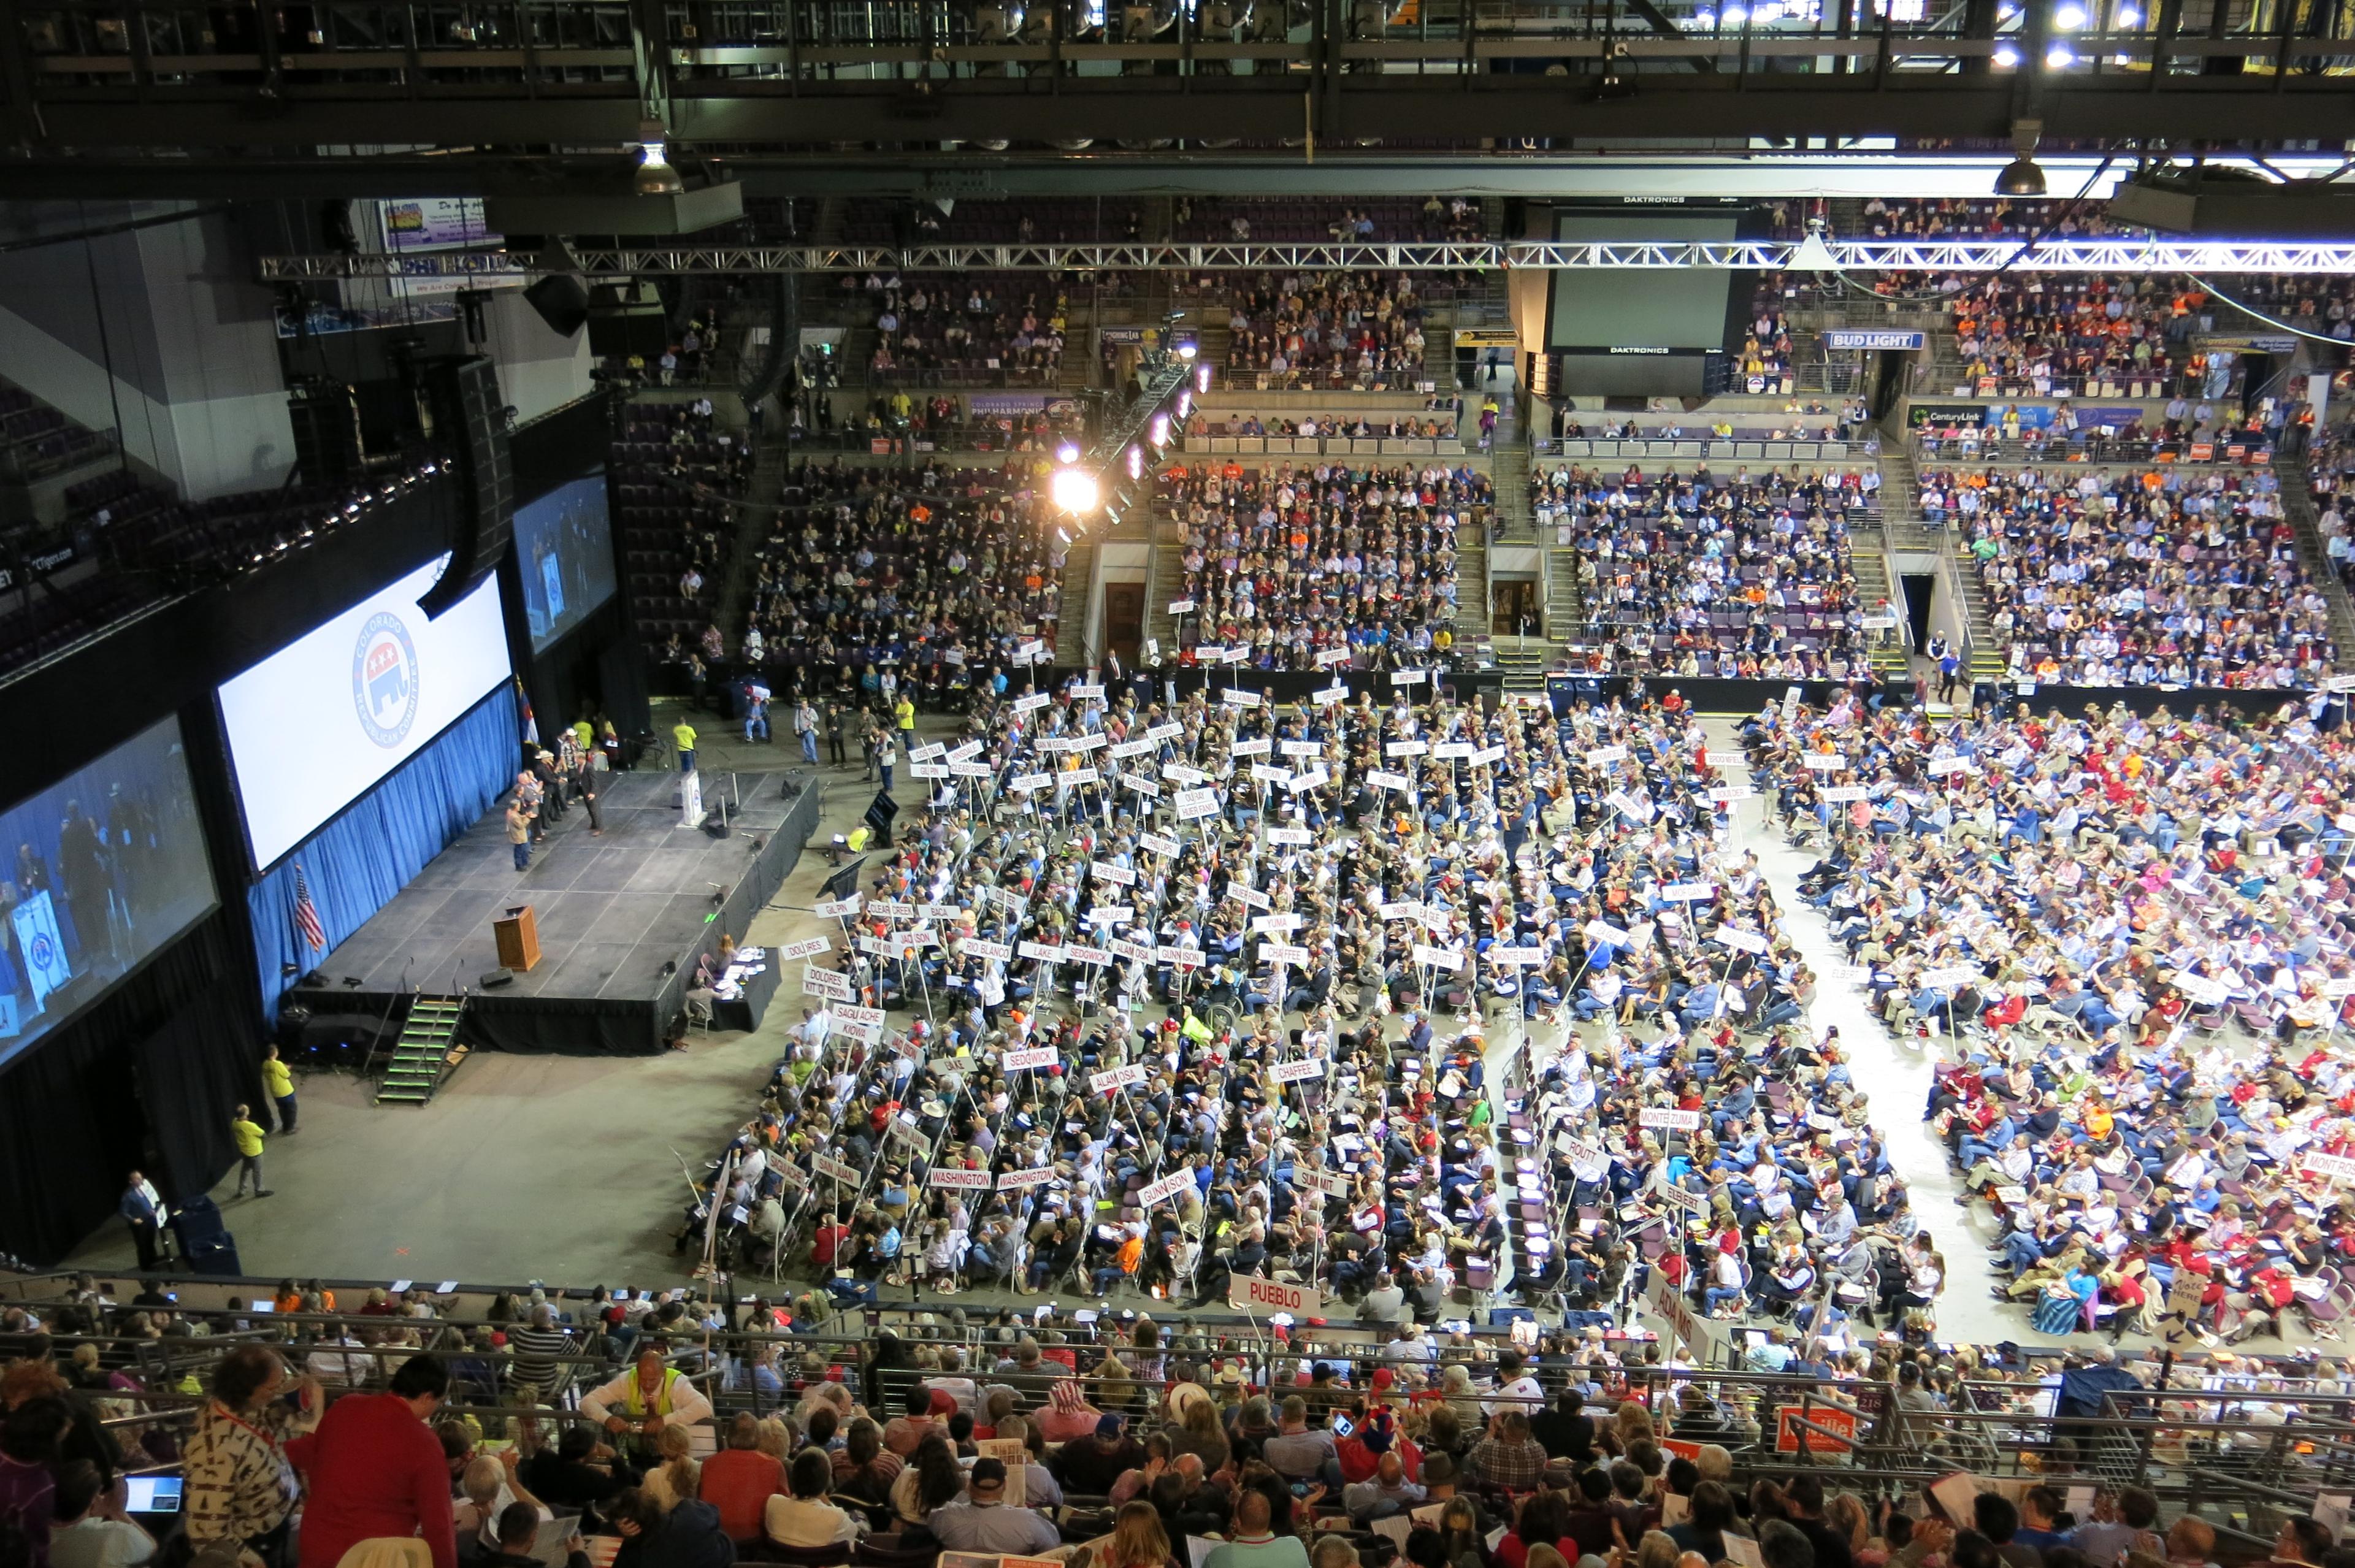 Photo: Colorado GOP State Convention Crowd